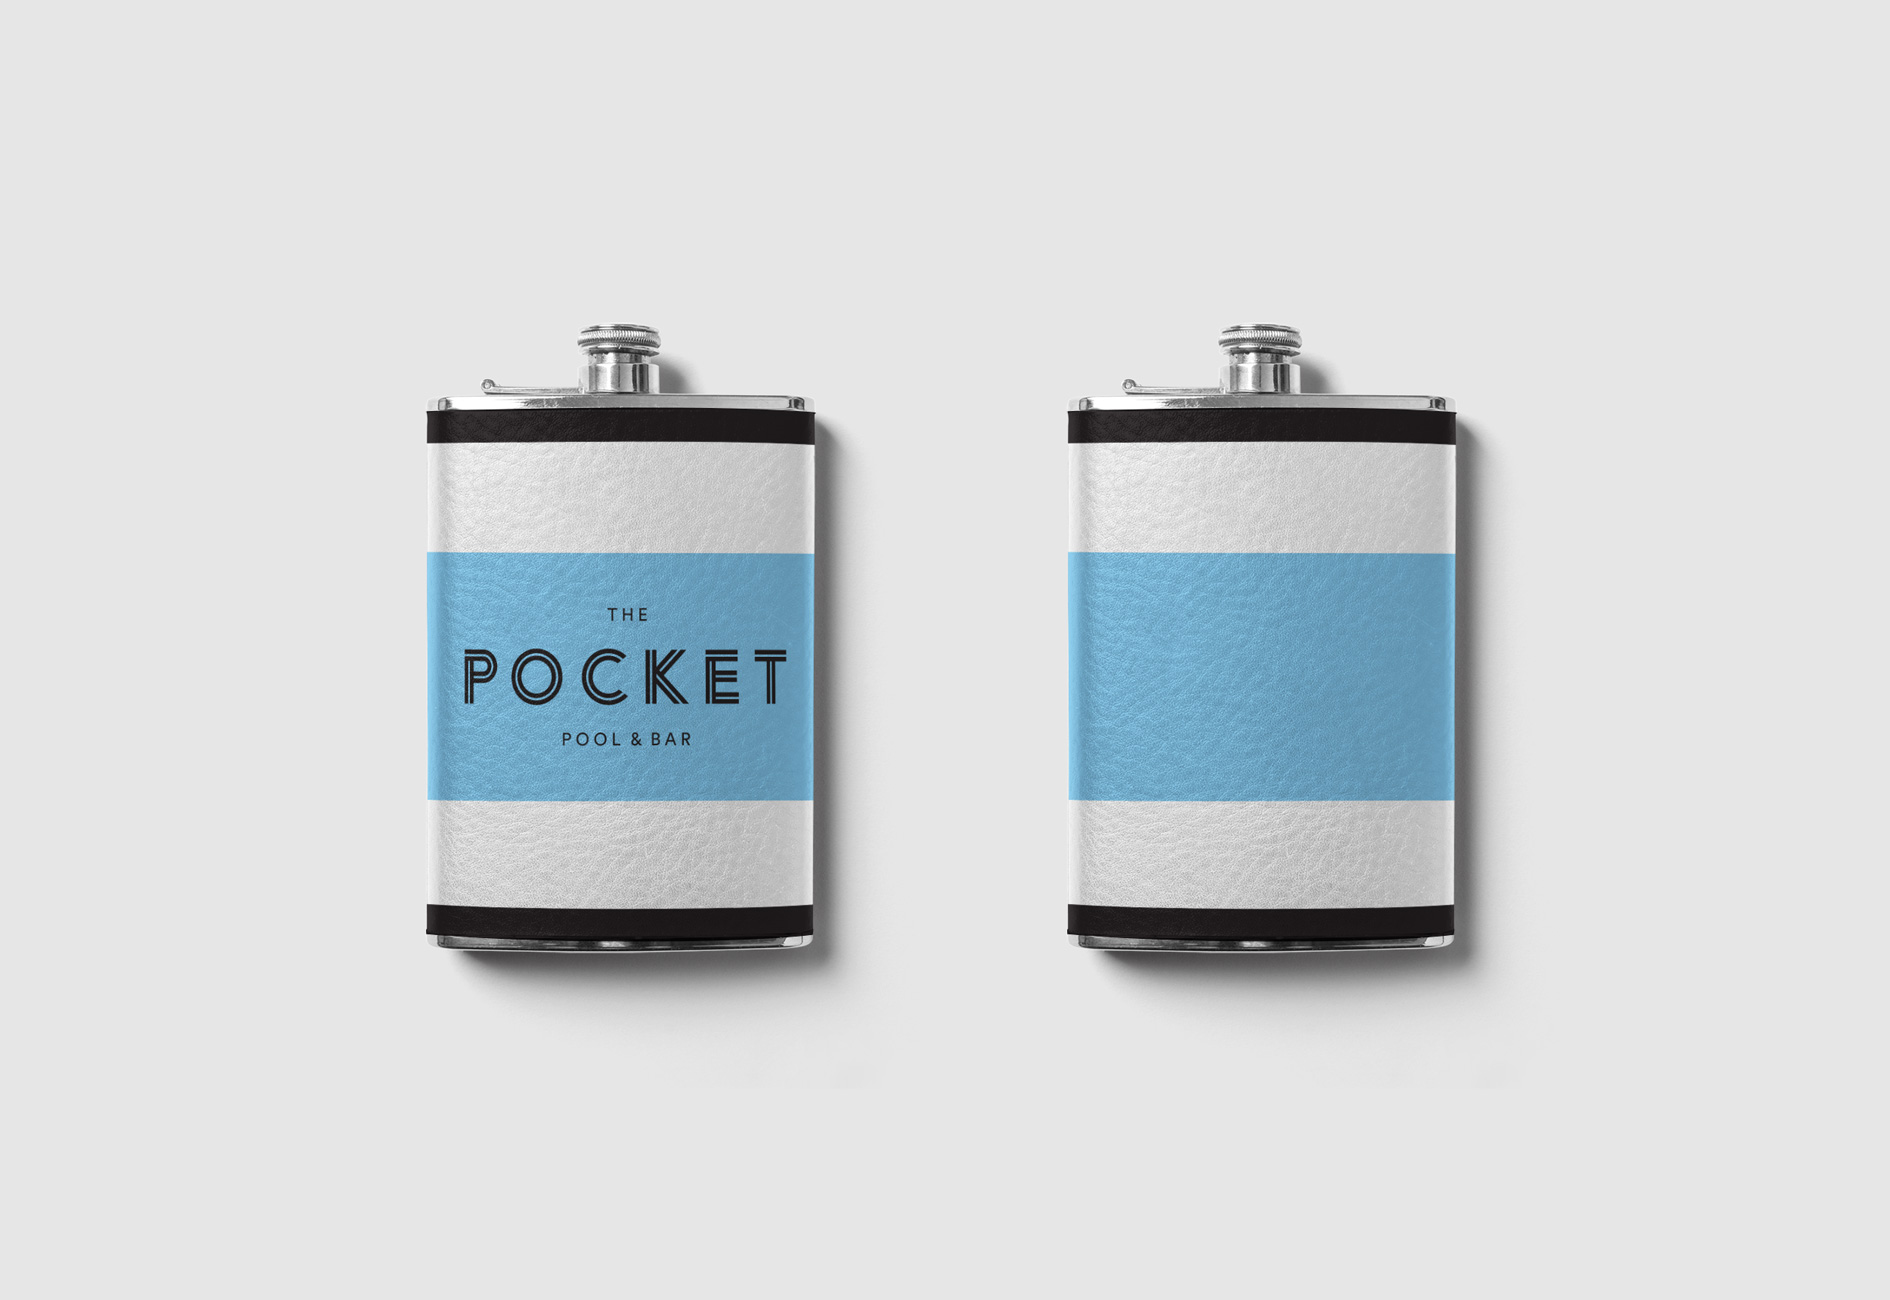 The Pocket Pool & Bar designed by Mark Zeff